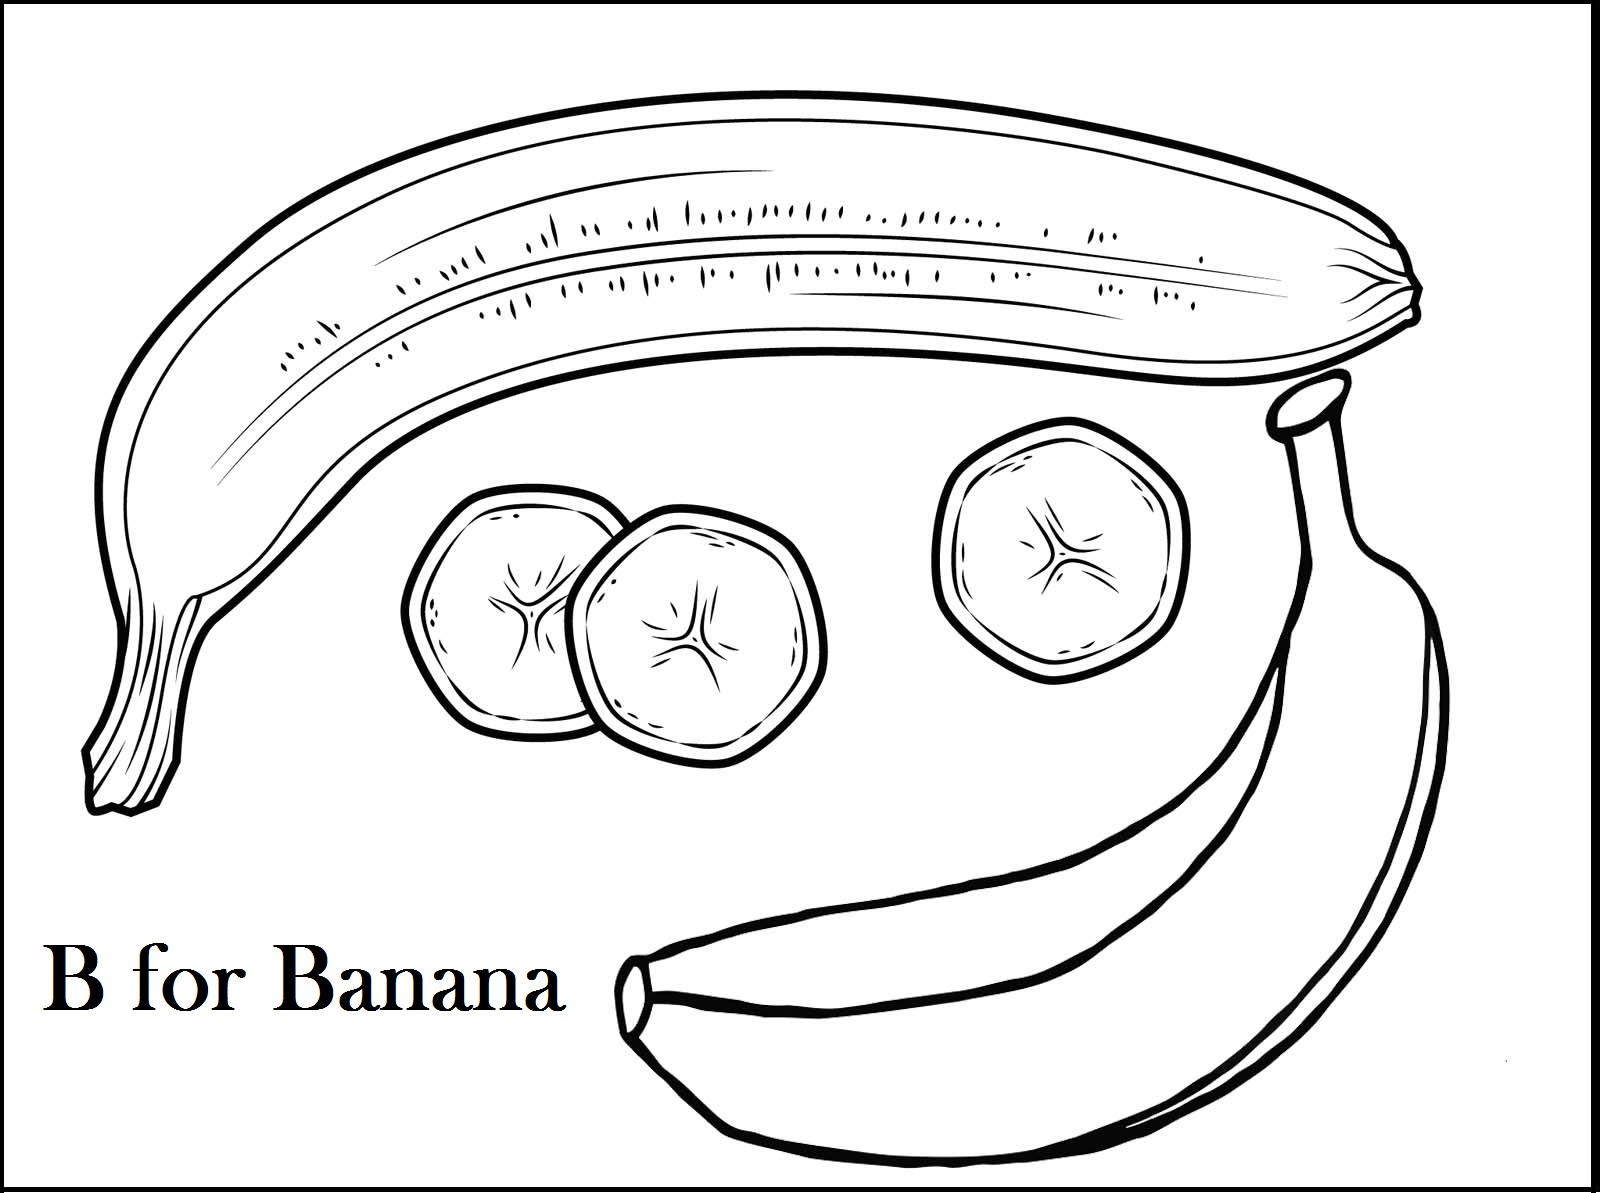 B for Banana Coloring Page